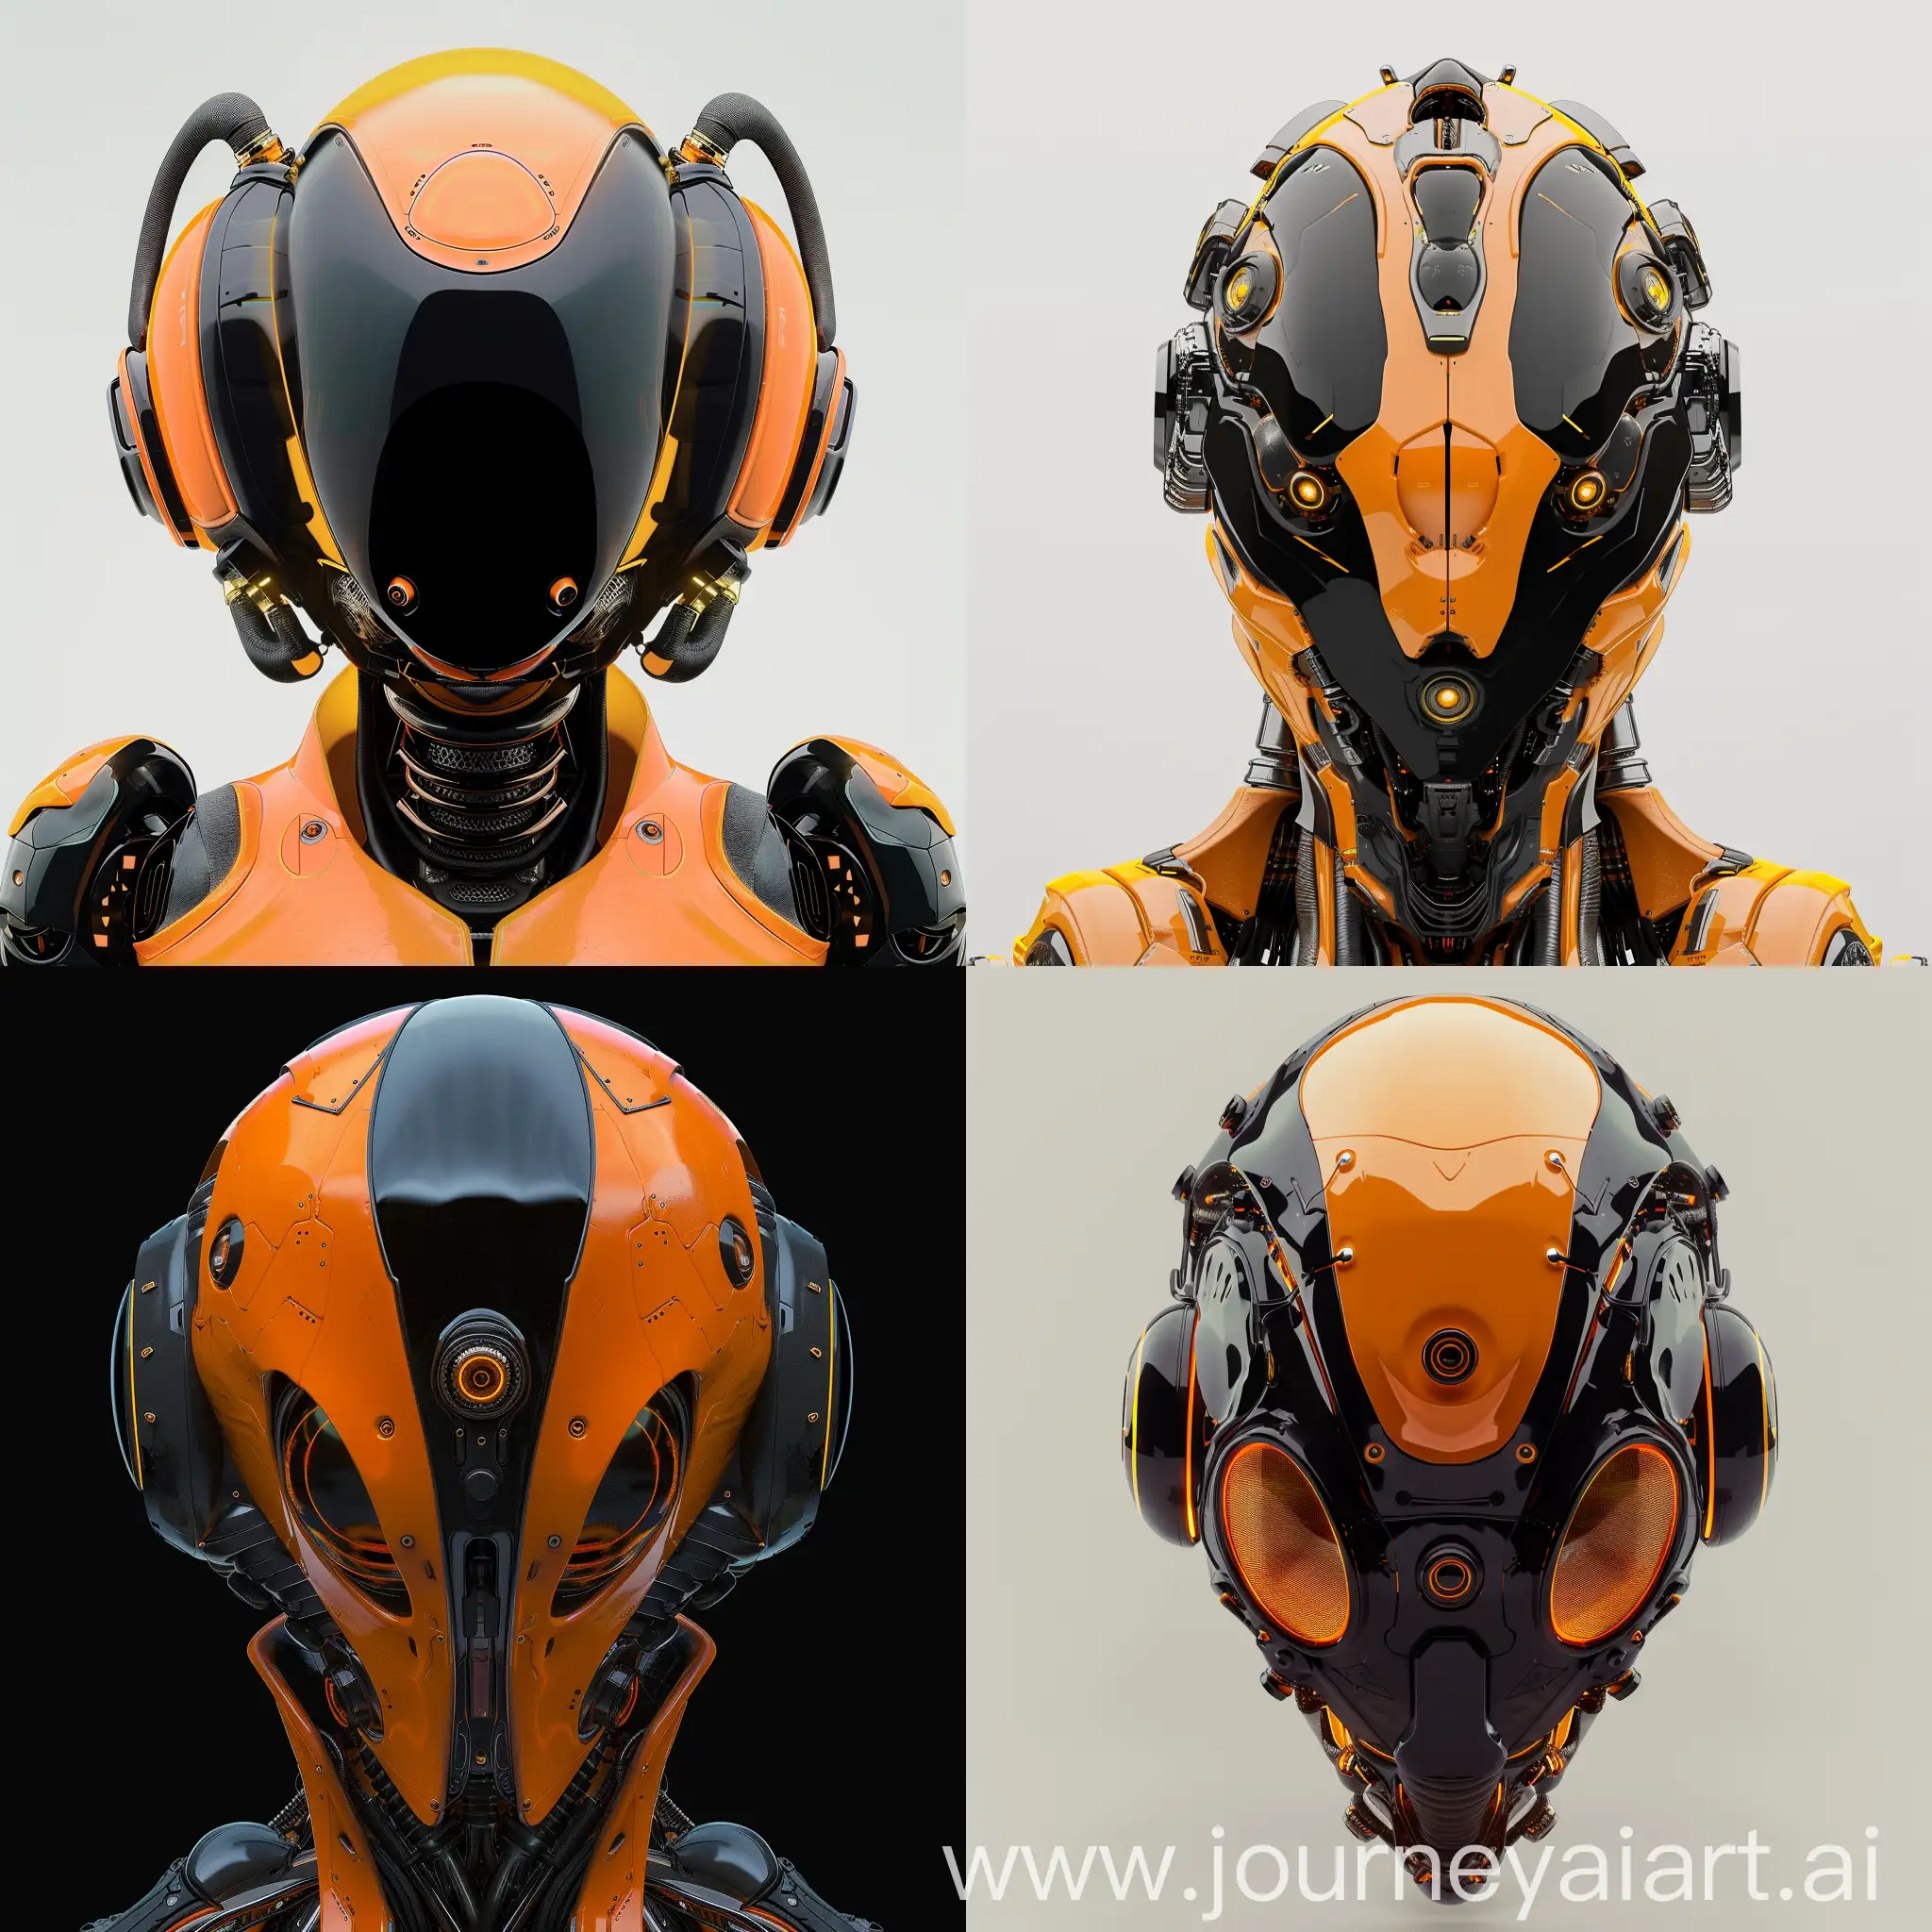 Vibrant-Orange-and-Black-RobotBee-Face-Avatar